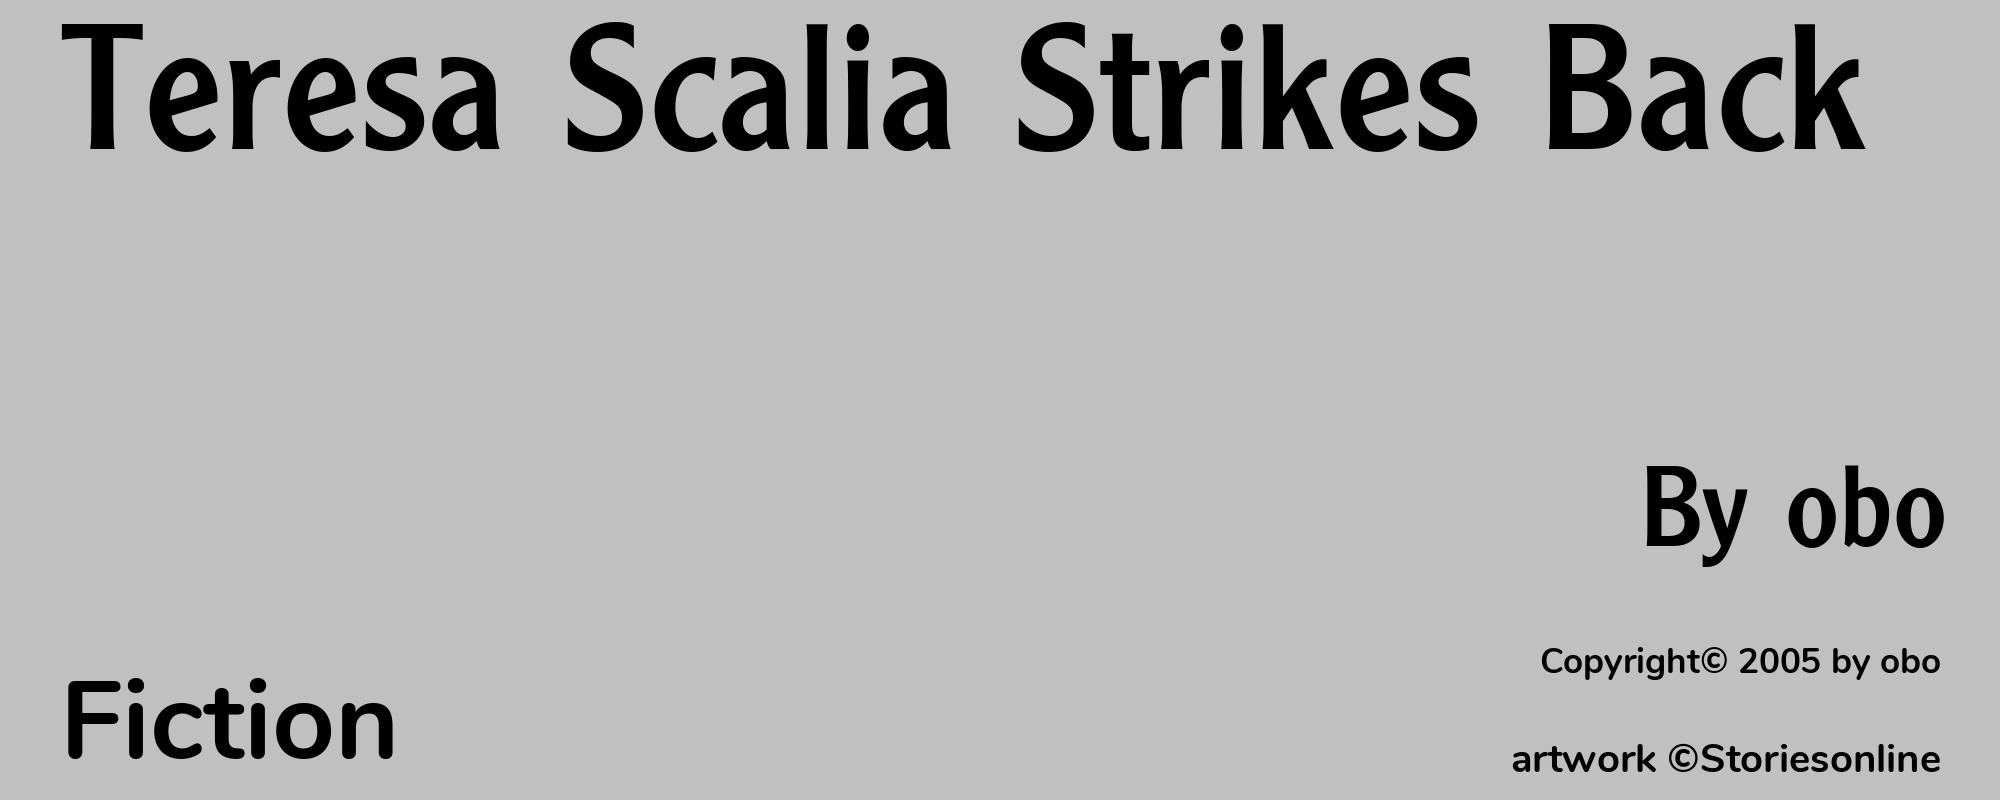 Teresa Scalia Strikes Back - Cover